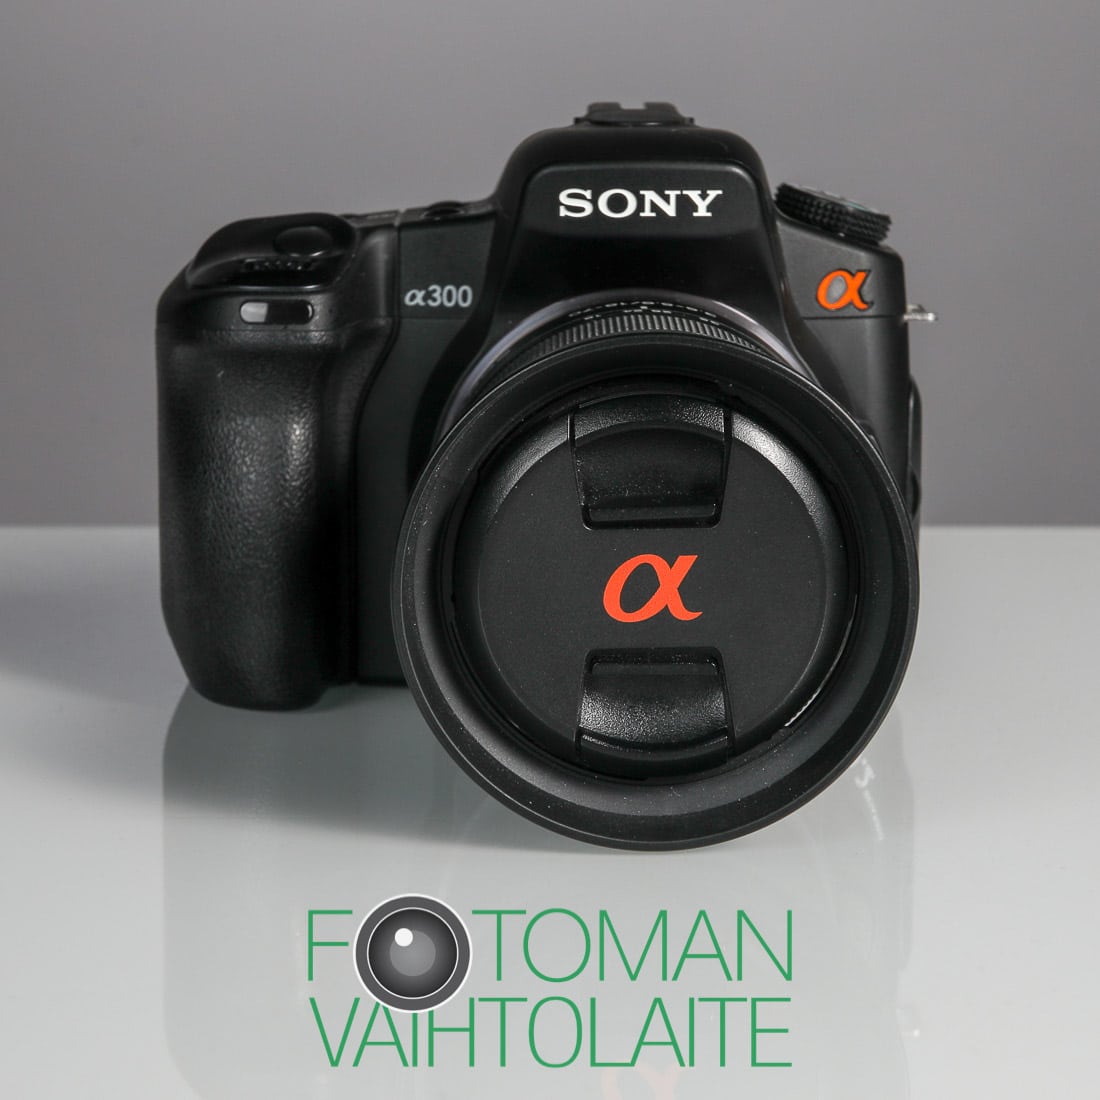 MYYTY Käytetty Sony a300 runko + 18-70mm f/3.5-5.6 objektiivi + salama